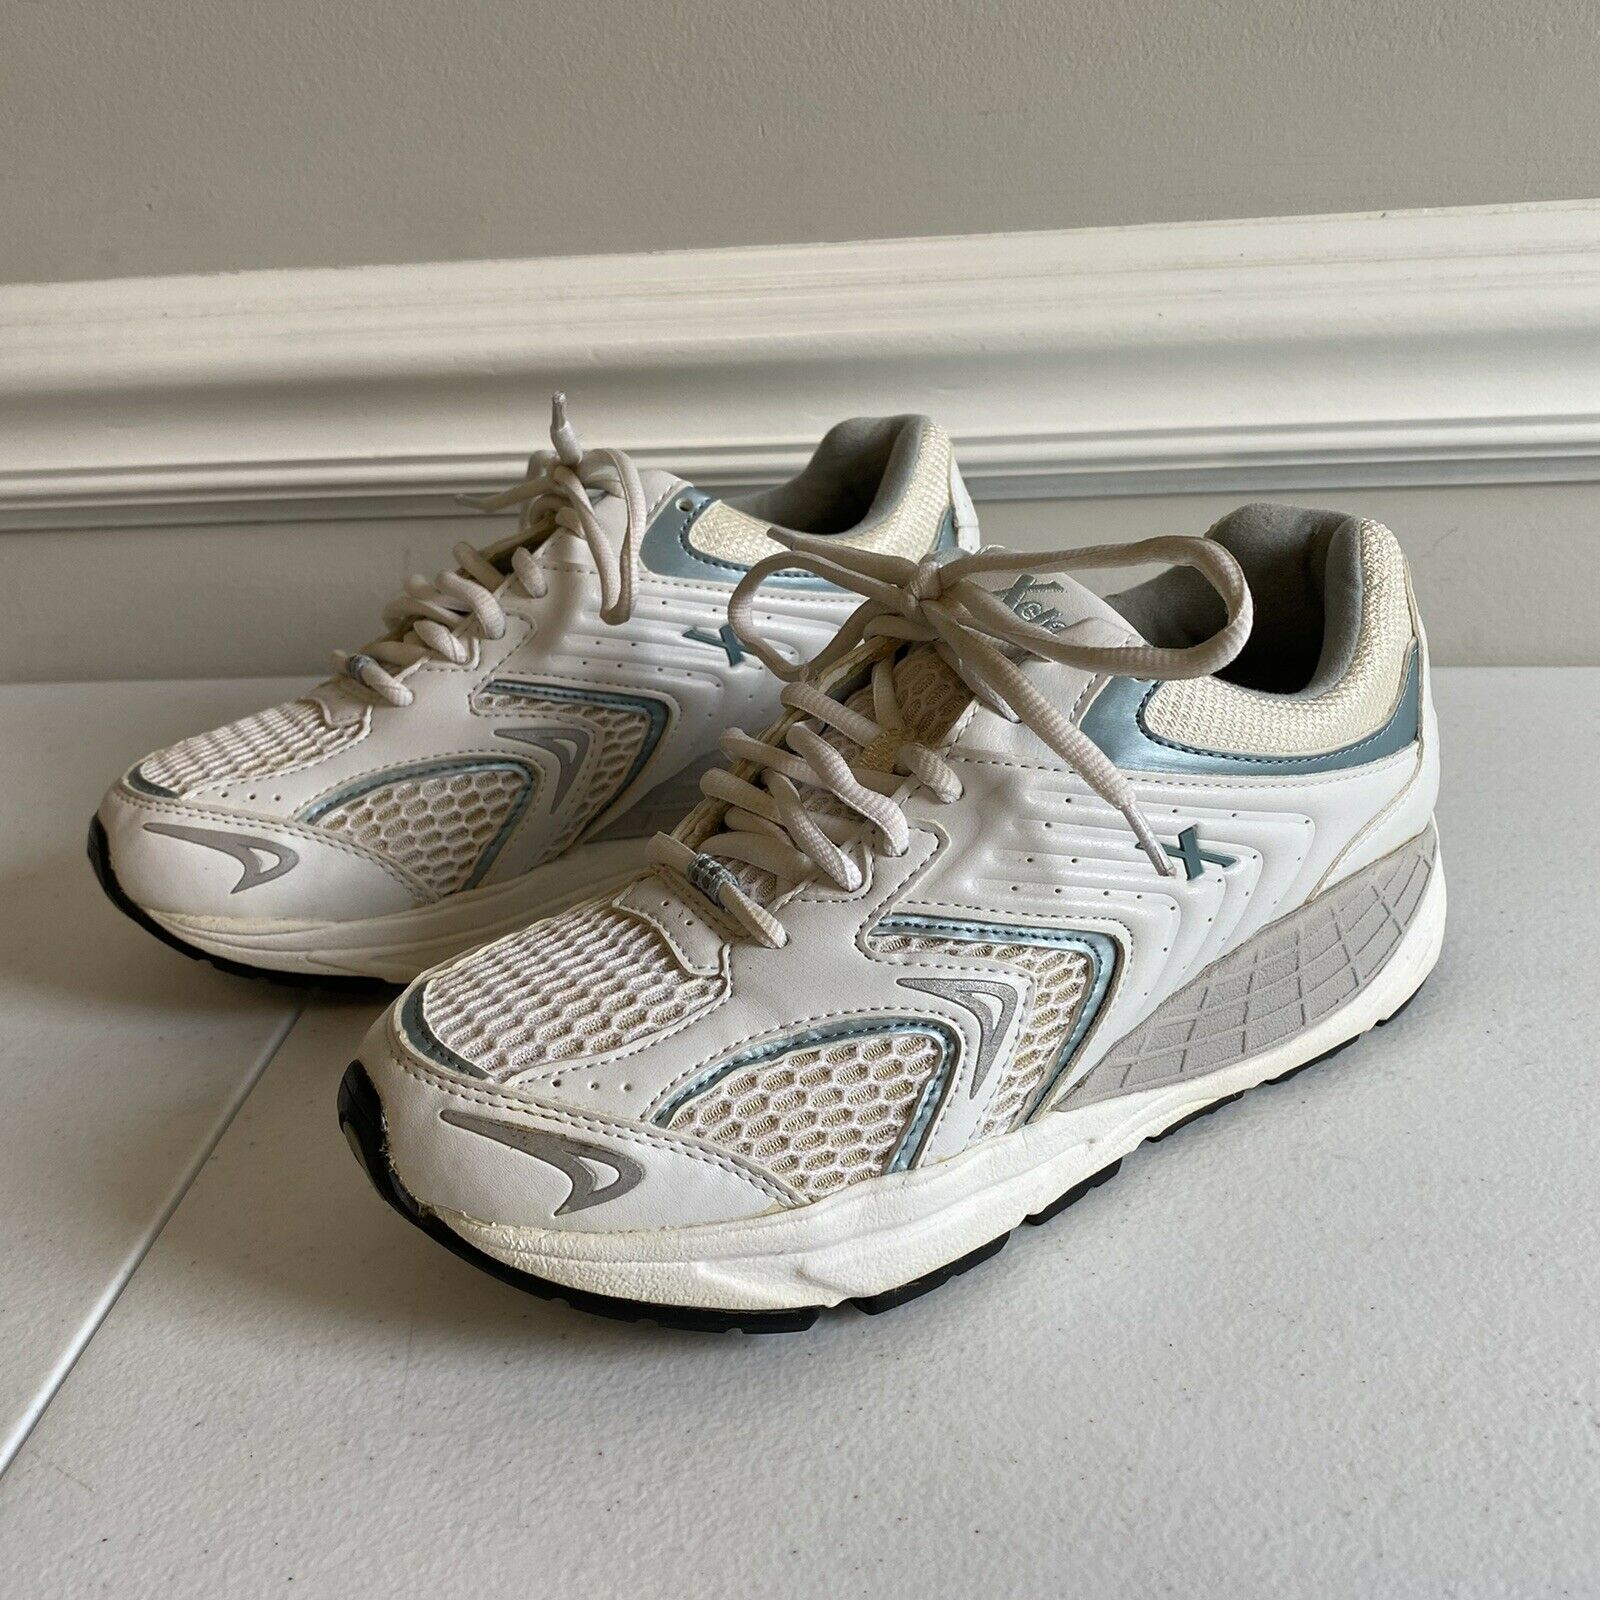 Xelero Women's White Comfort Walking Shoes Sneakers Size 8.5